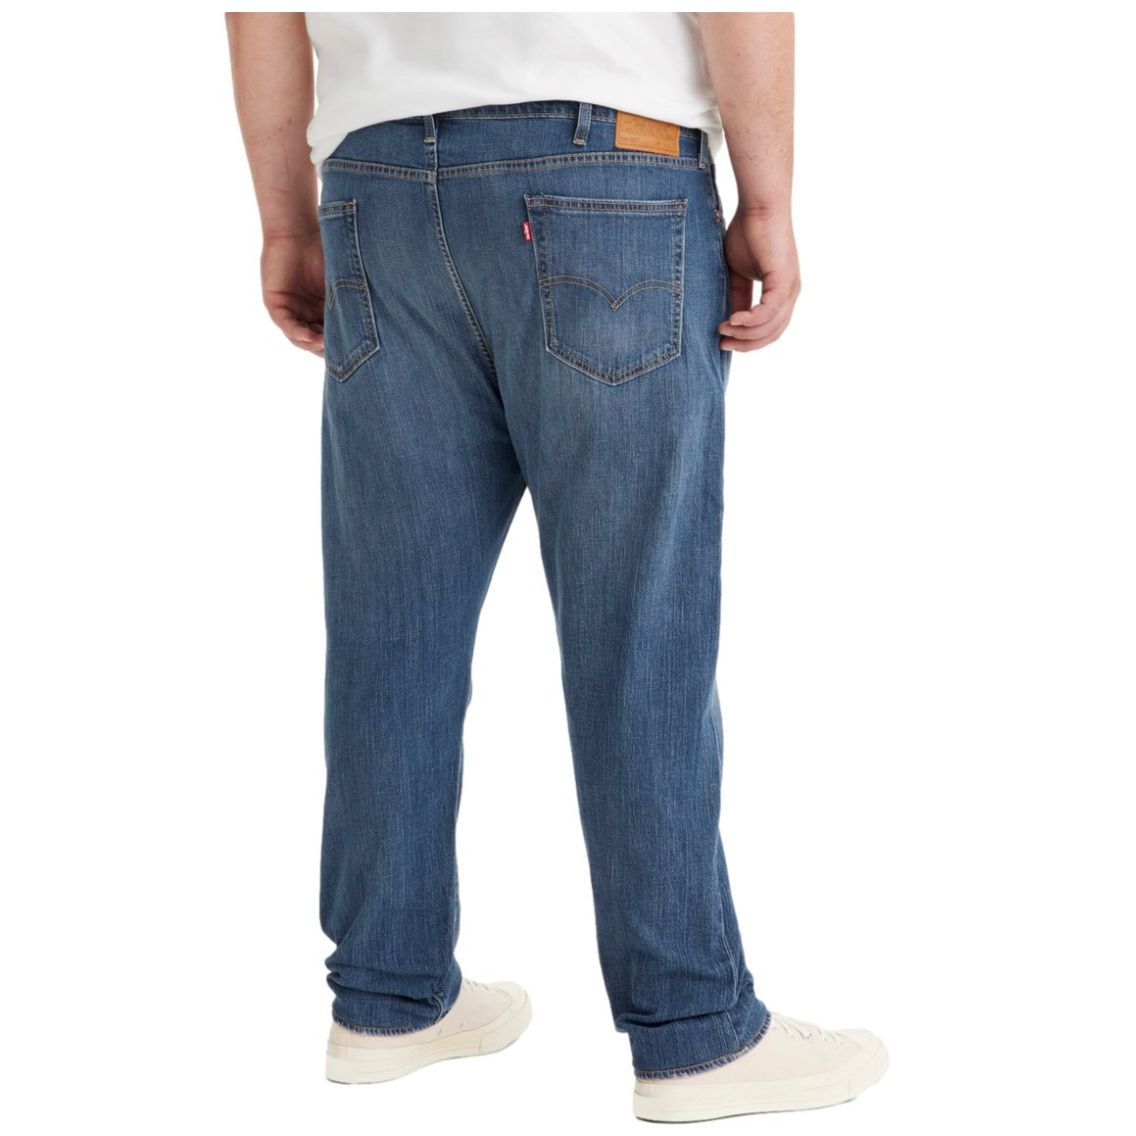 Jeans y Pantalones Levis 502 para Hombre